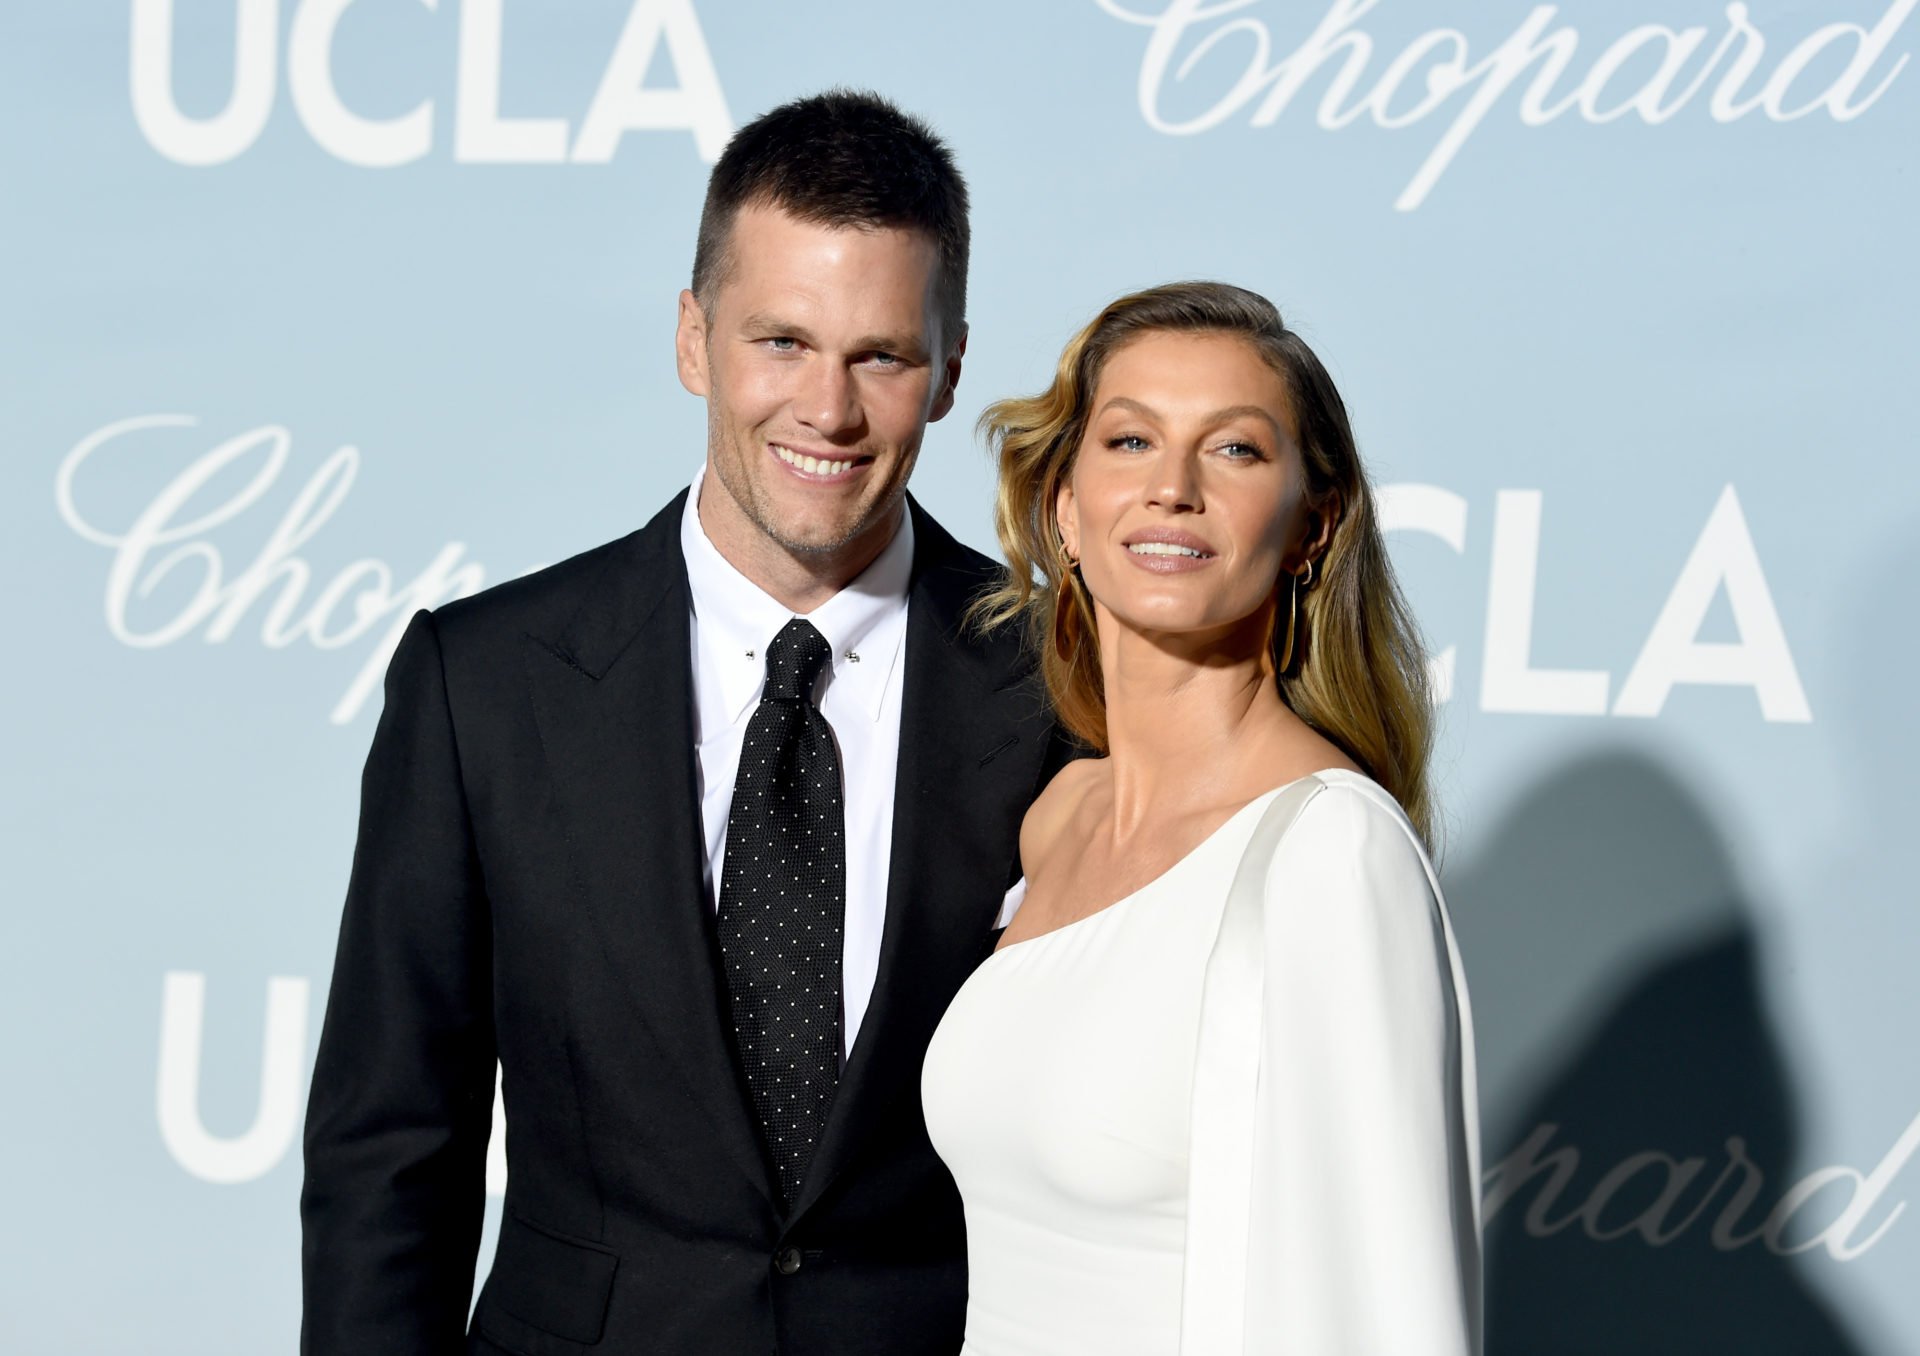 Why did Tom Brady and Gisele Bündchen divorce?